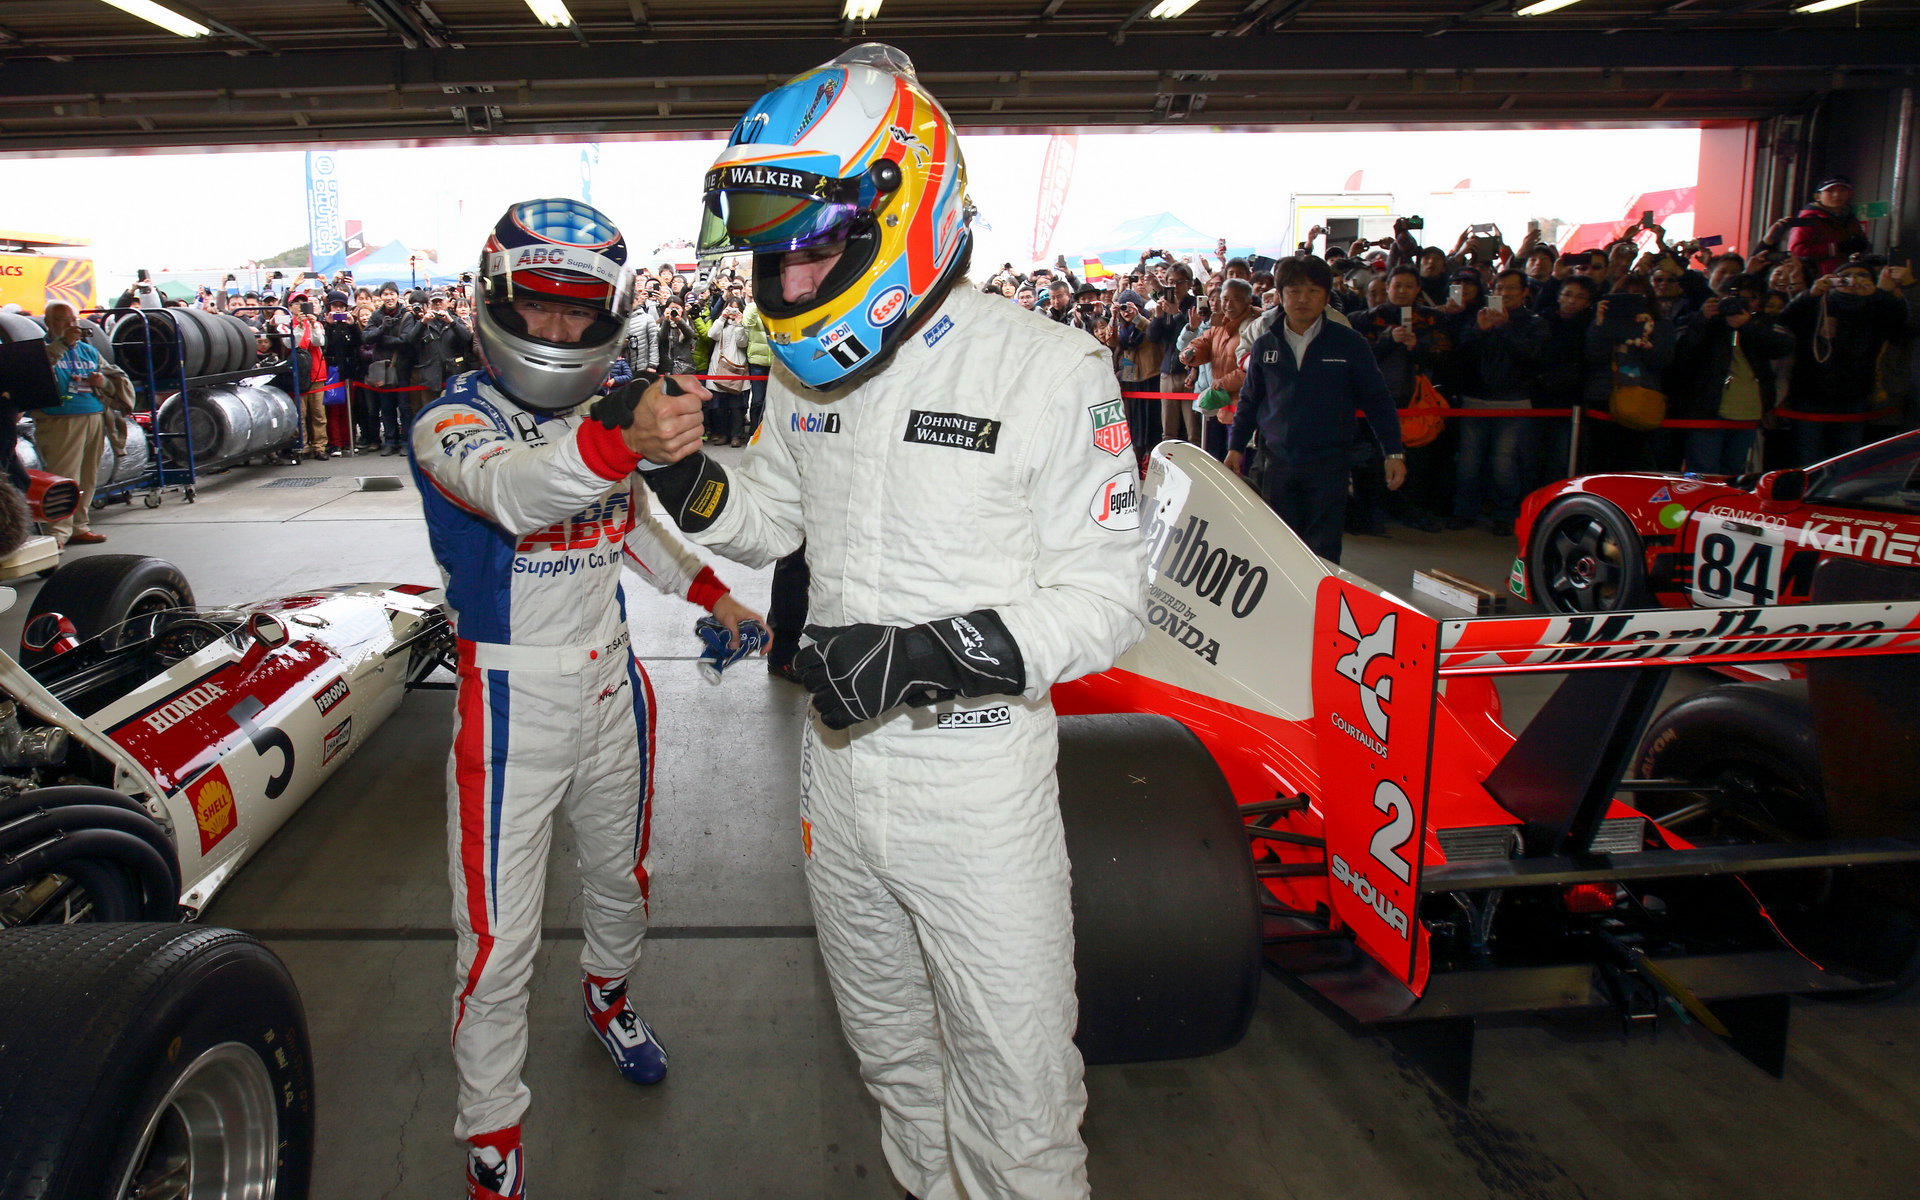 Takuma Sato a Fernando Alonso při Thanks Day na okruhu Twin Ring Motegi